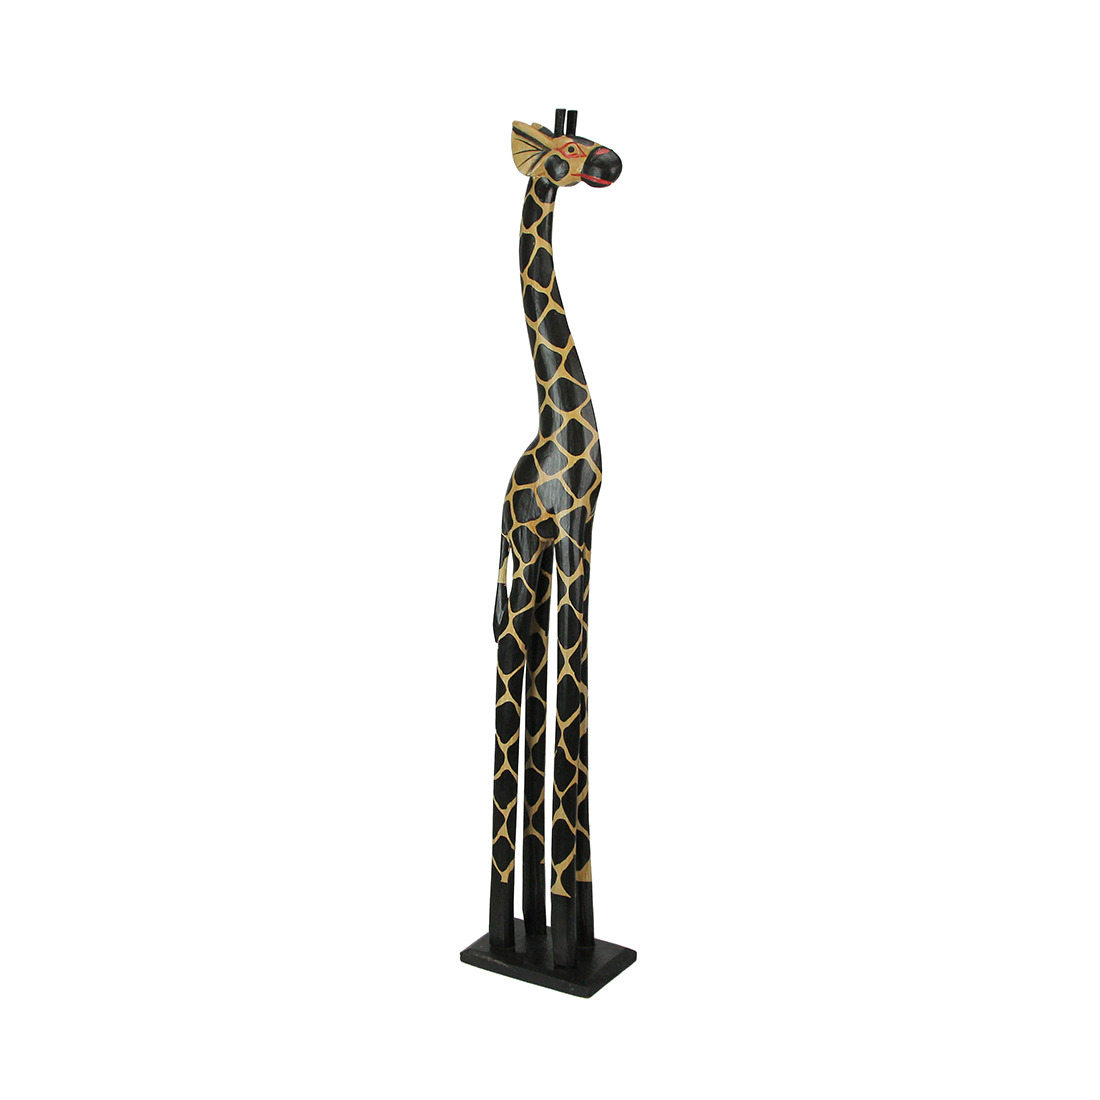 Primary image for 36 Inch Hand Carved Wooden Giraffe Sculpture Safari Home Decor Figurine Statue